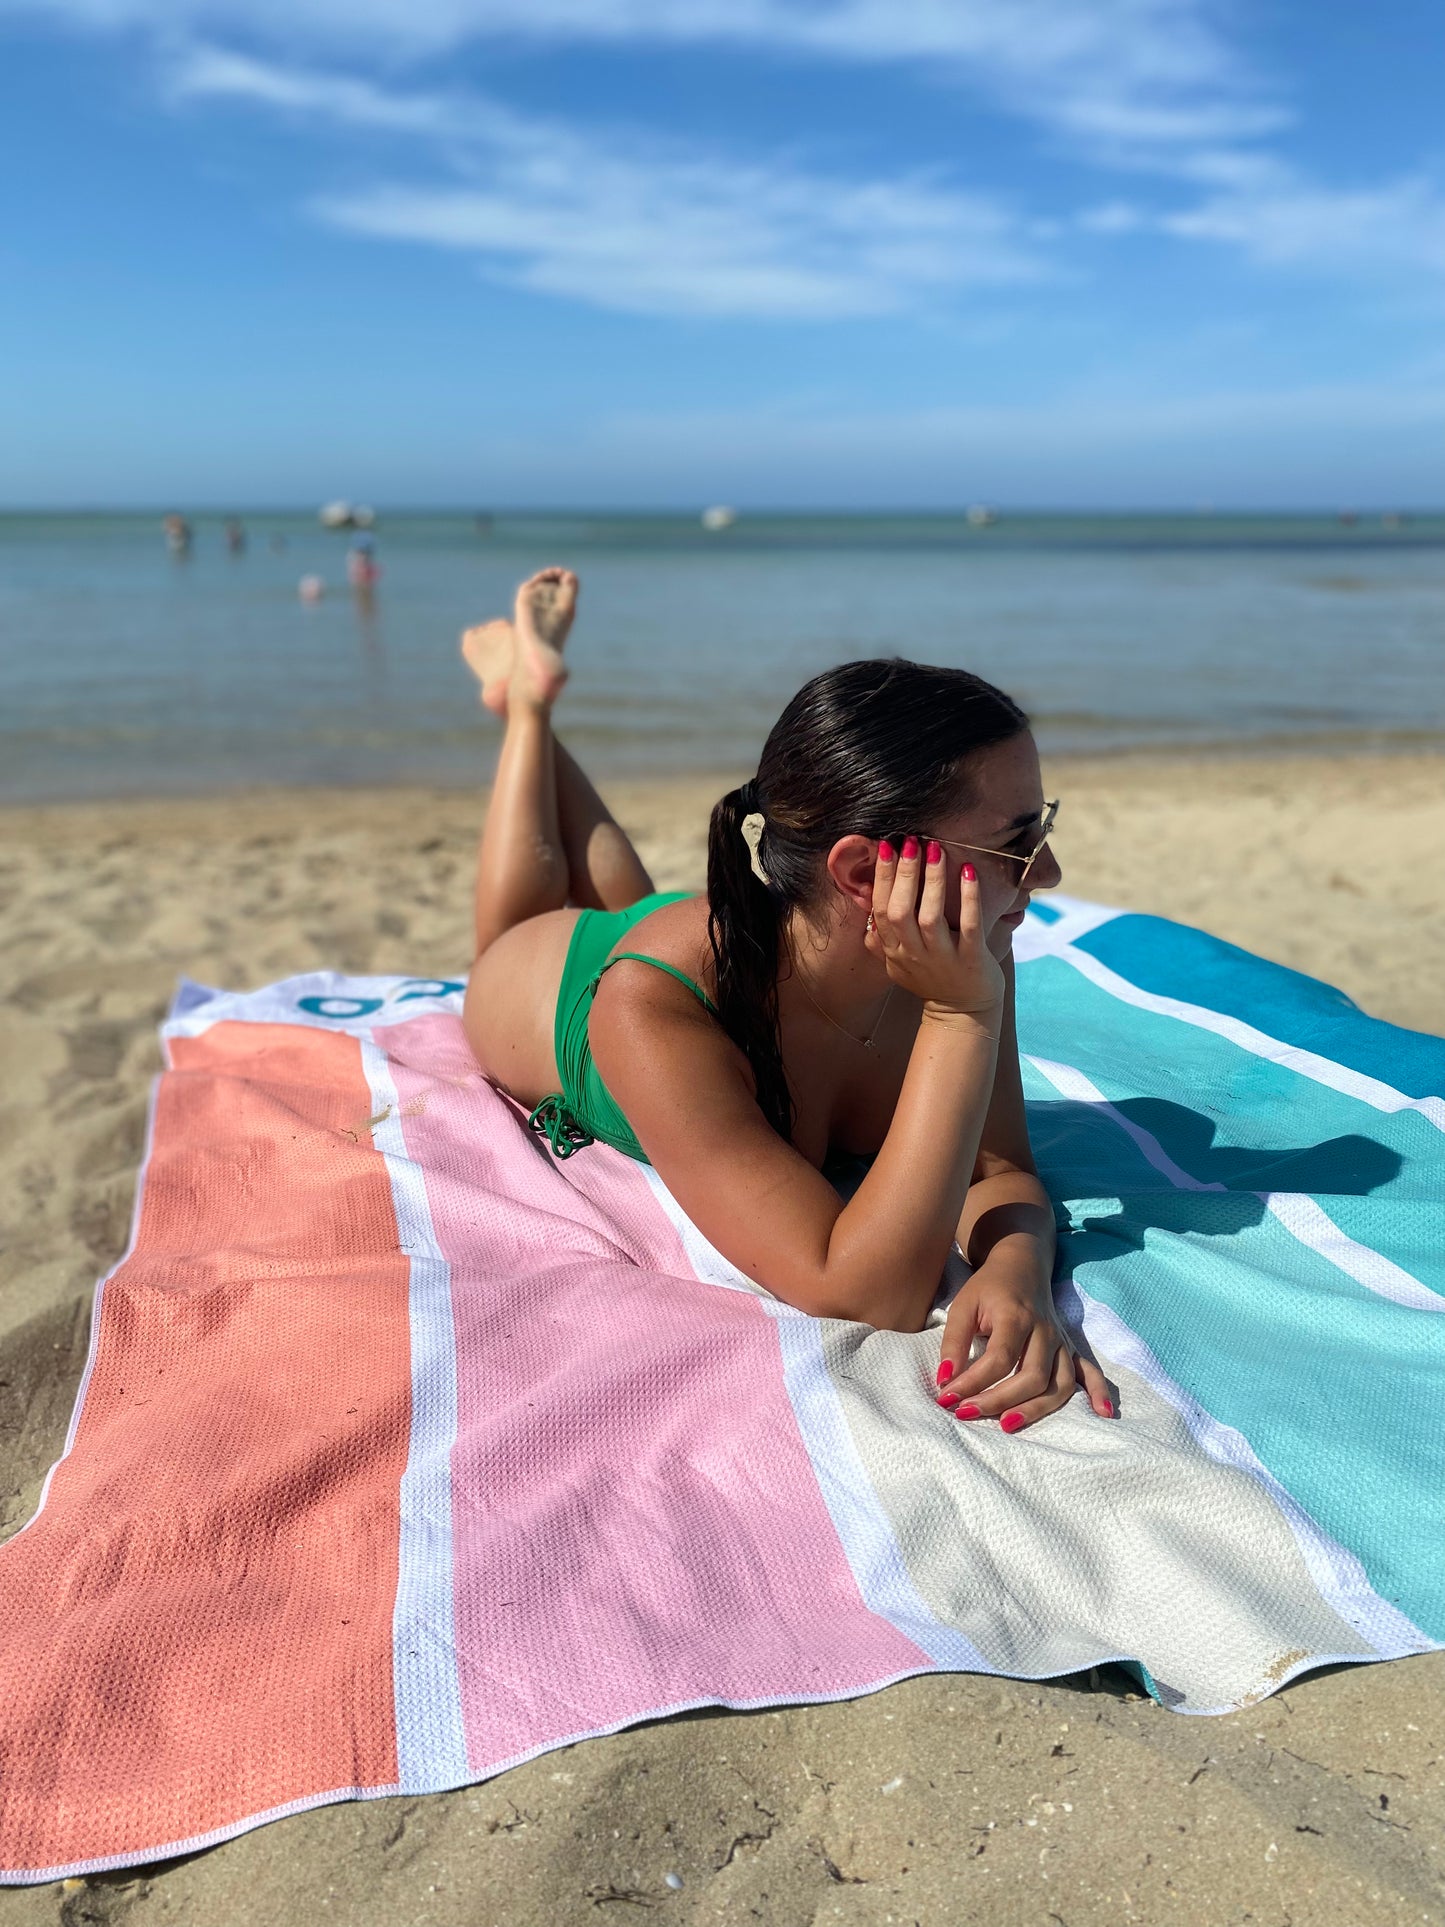 Life of Coco Sand-free beach towel XL reversible 1.8m x 1.6m - Rainbow